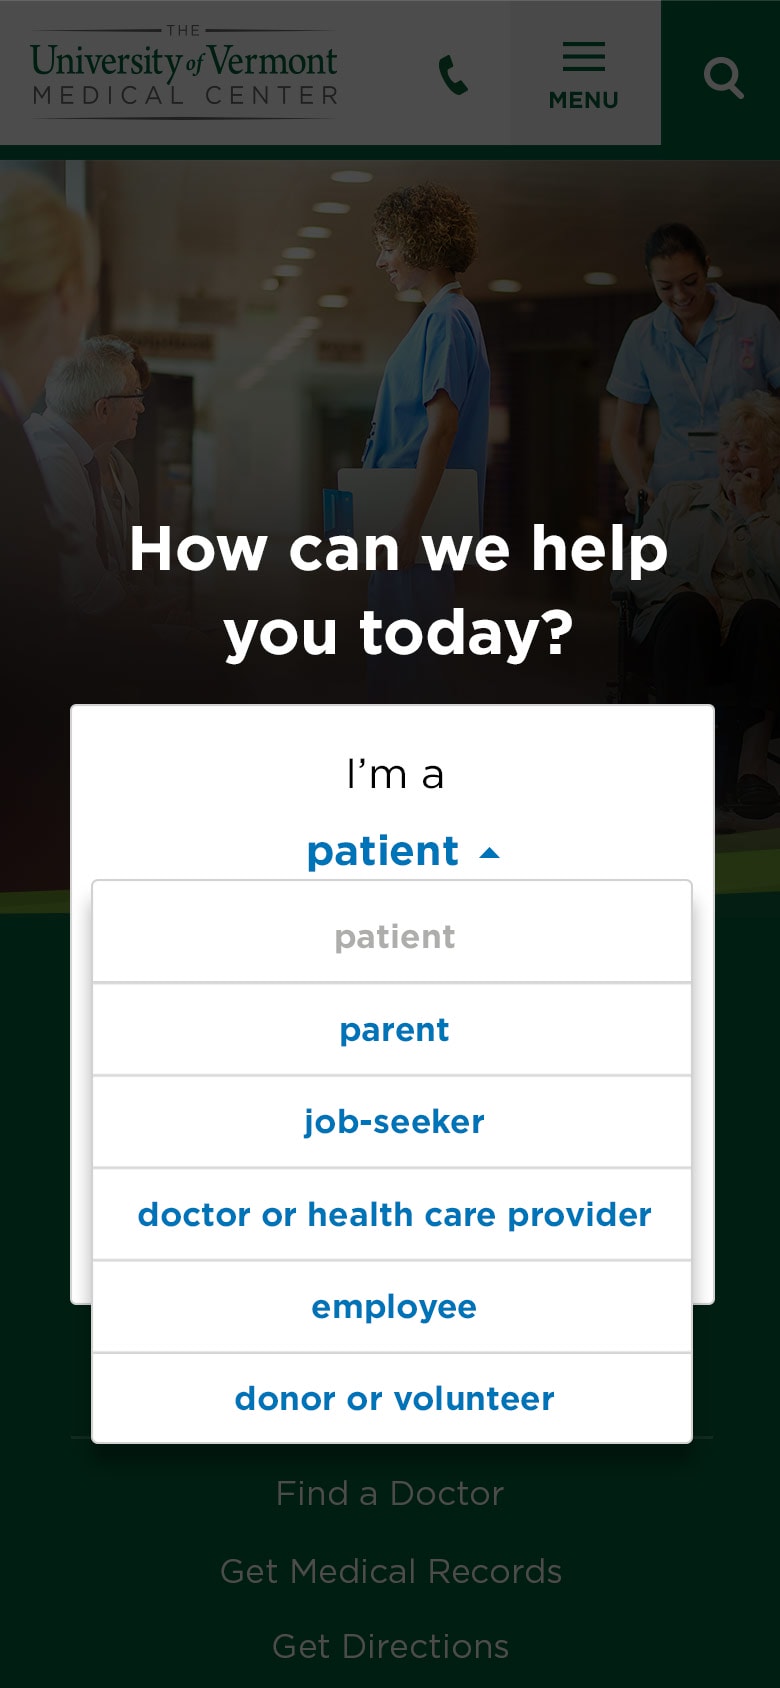 UVM Medical Center website homepage wizard options (mobile)